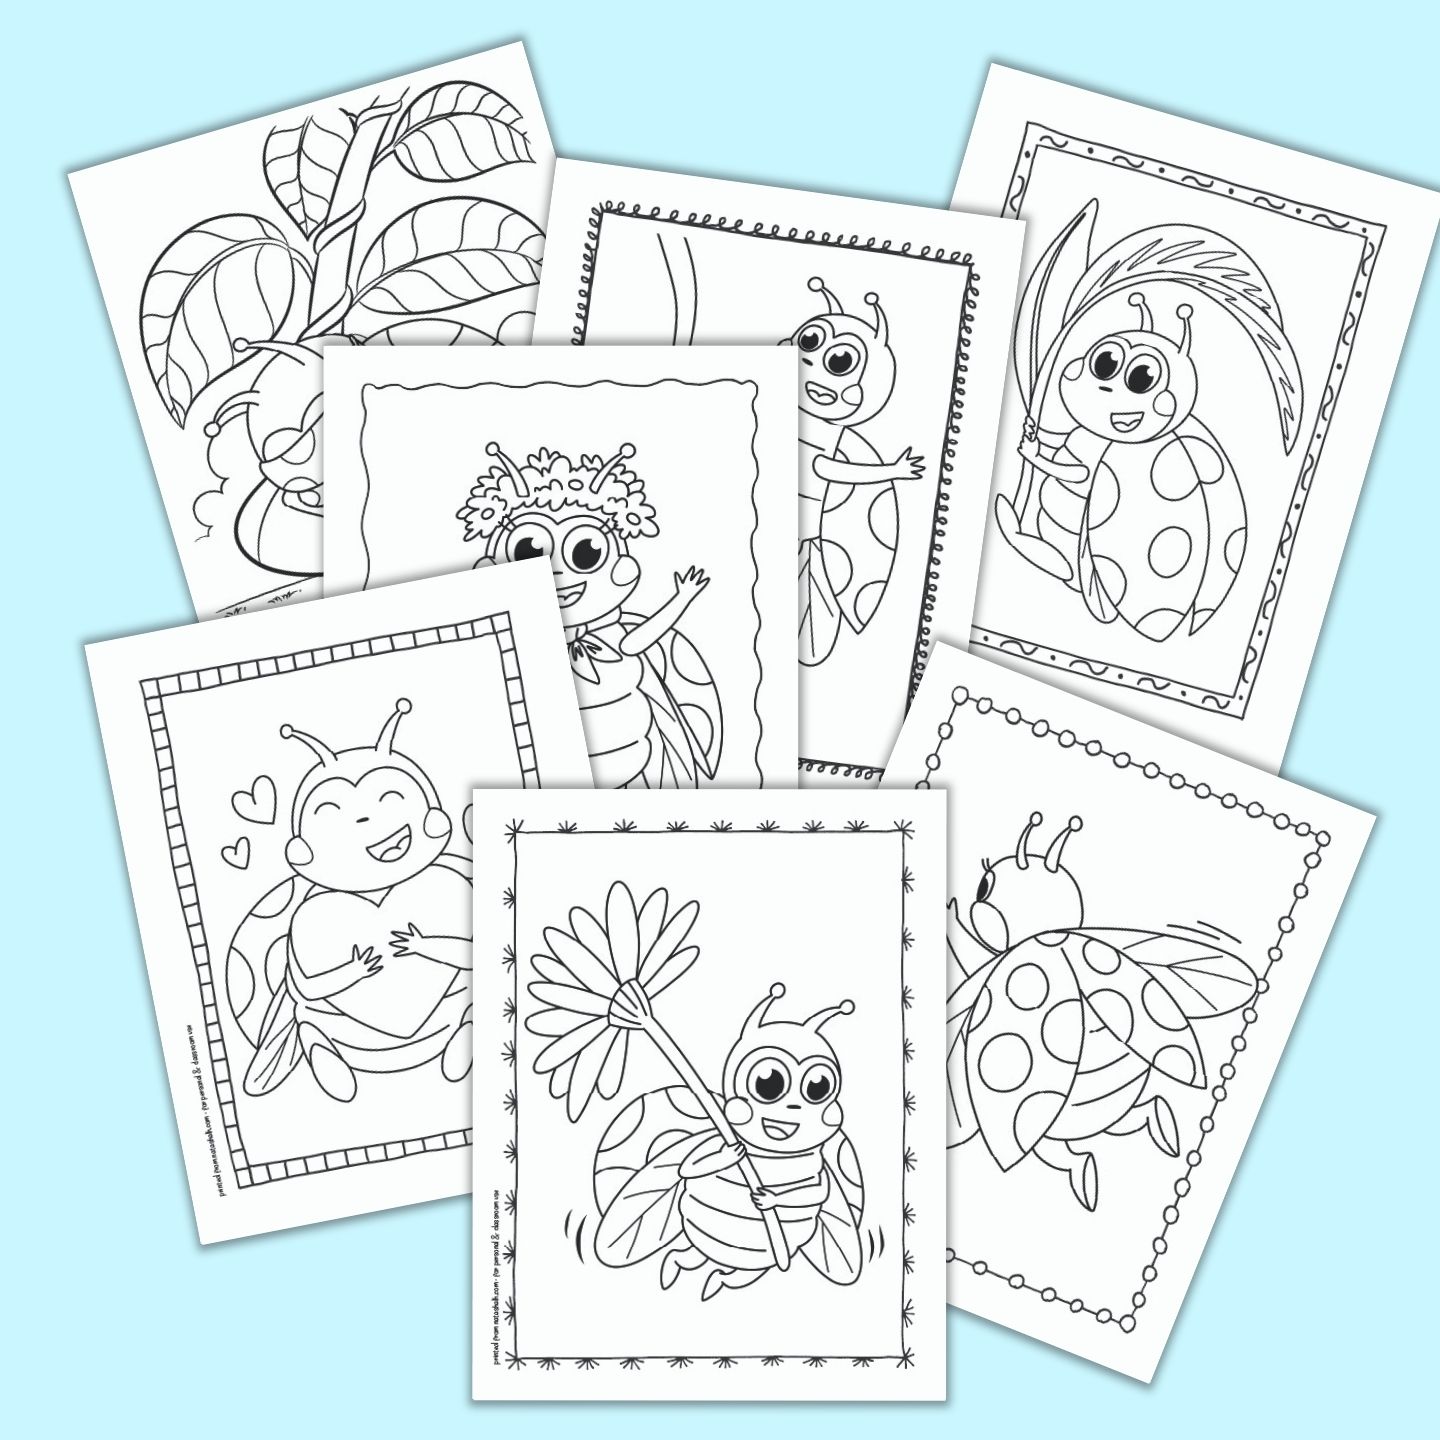 15+ Free Printable Ladybug Coloring Pages for Kids - The Artisan Life